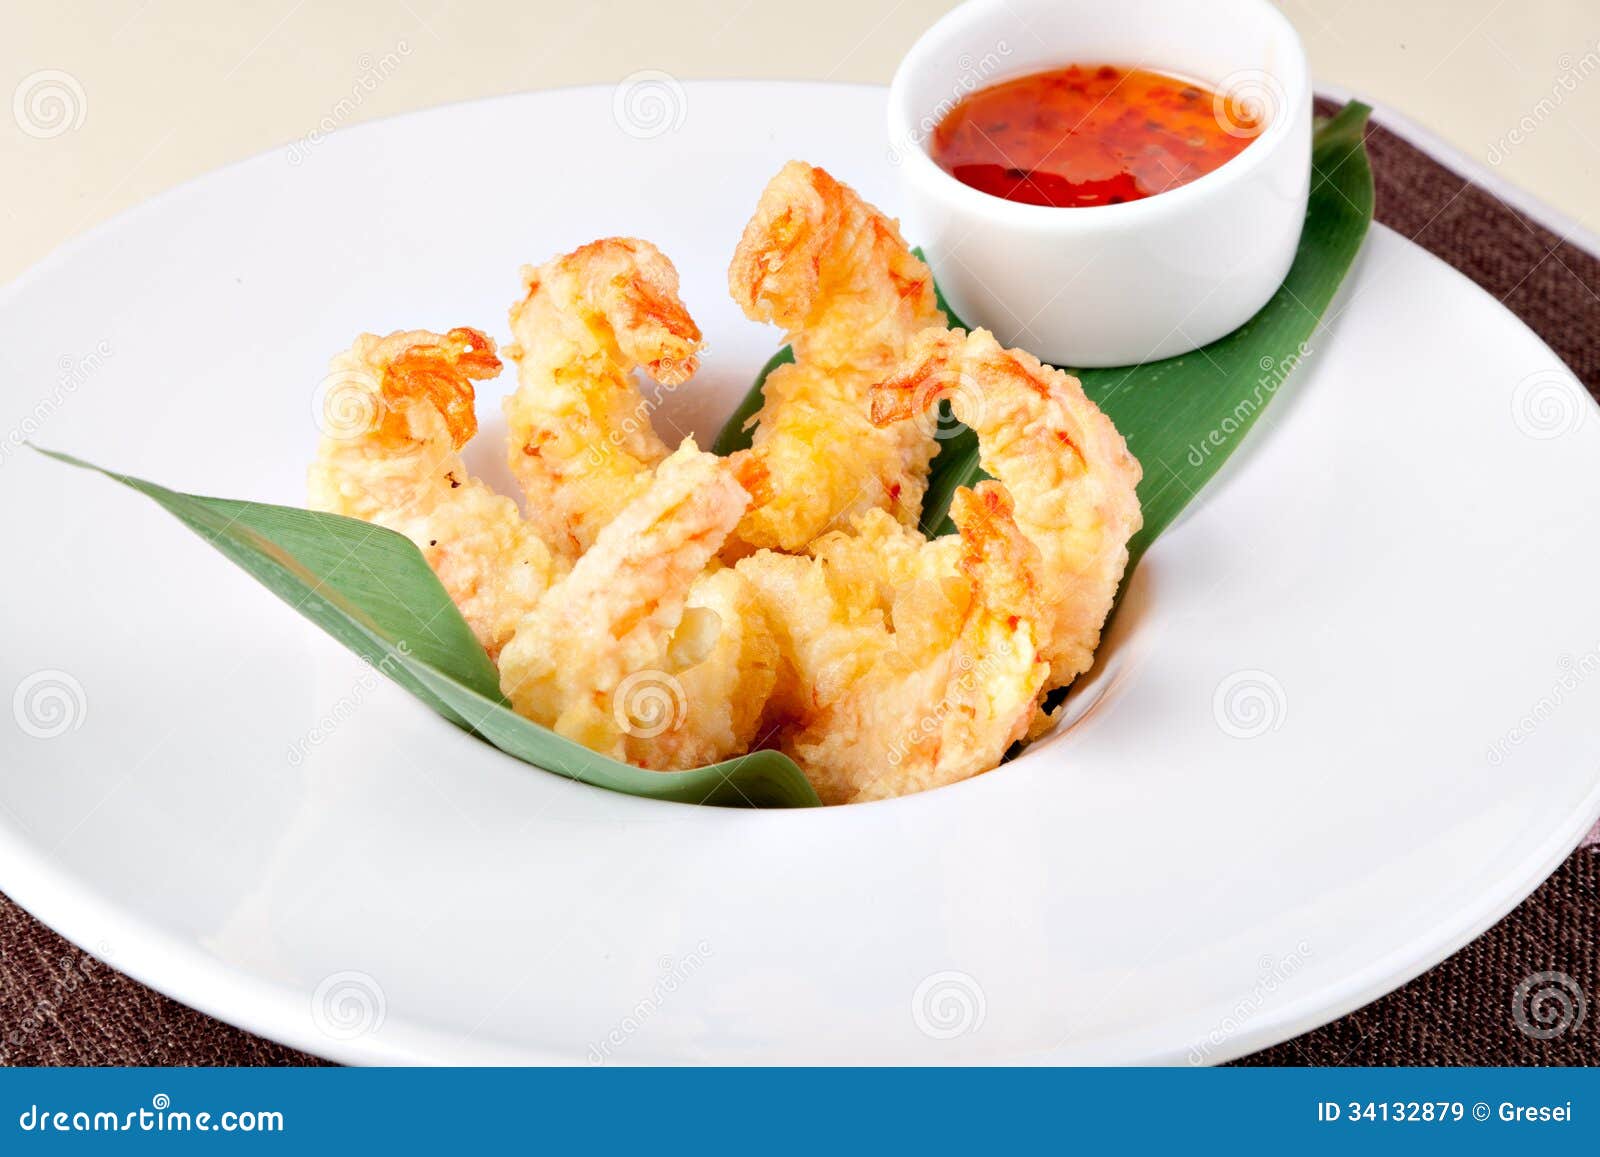 Deep Fried Shrimps stock image. Image of cuisine, closeup - 34132879